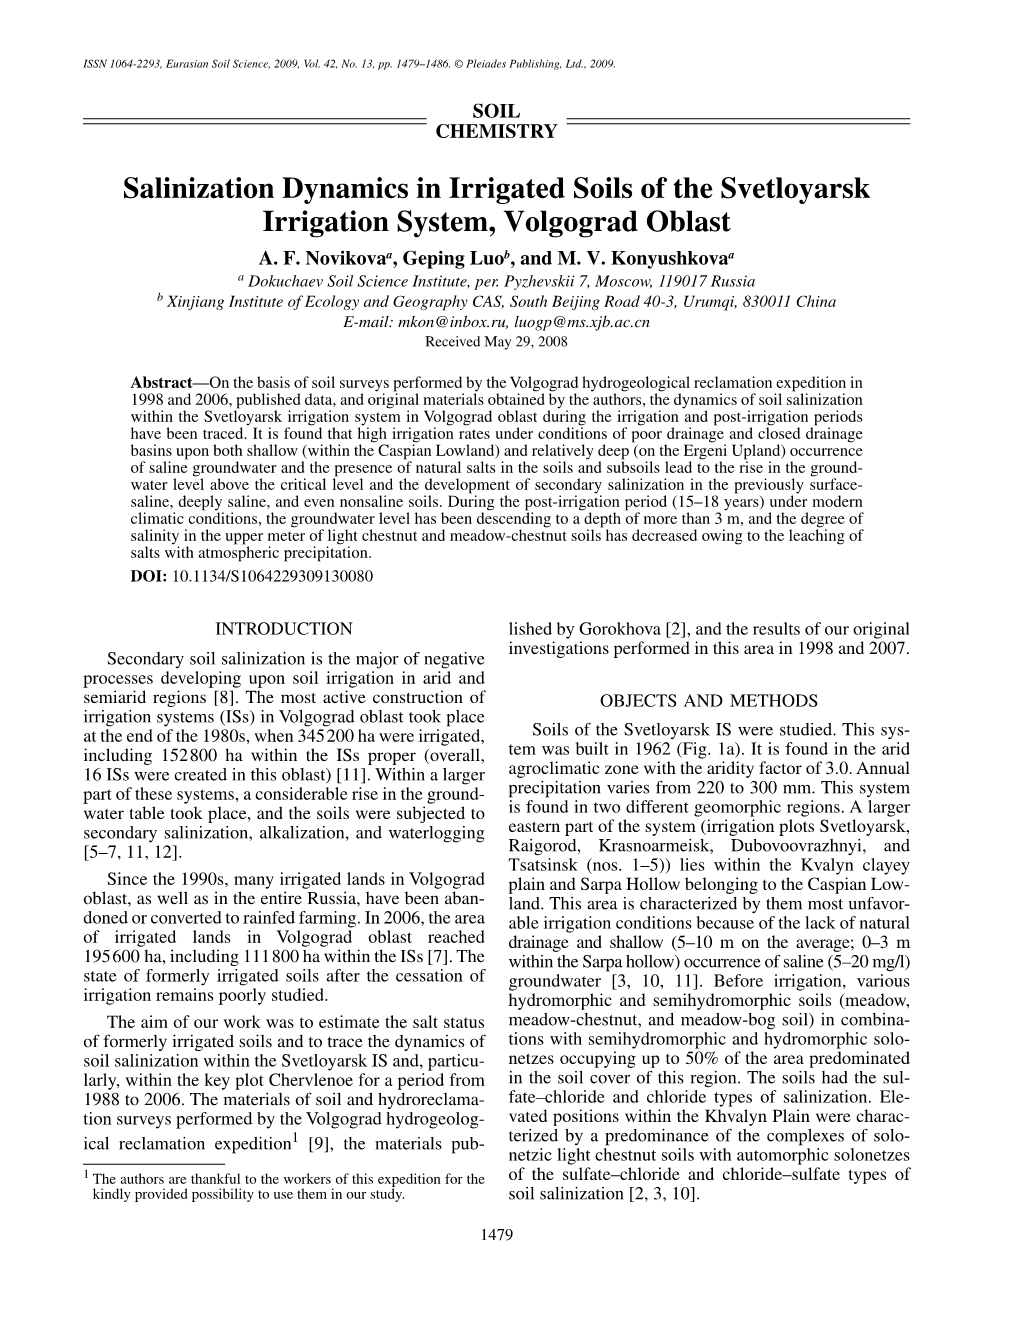 Salinization Dynamics in Irrigated Soils of the Svetloyarsk Irrigation System, Volgograd Oblast A